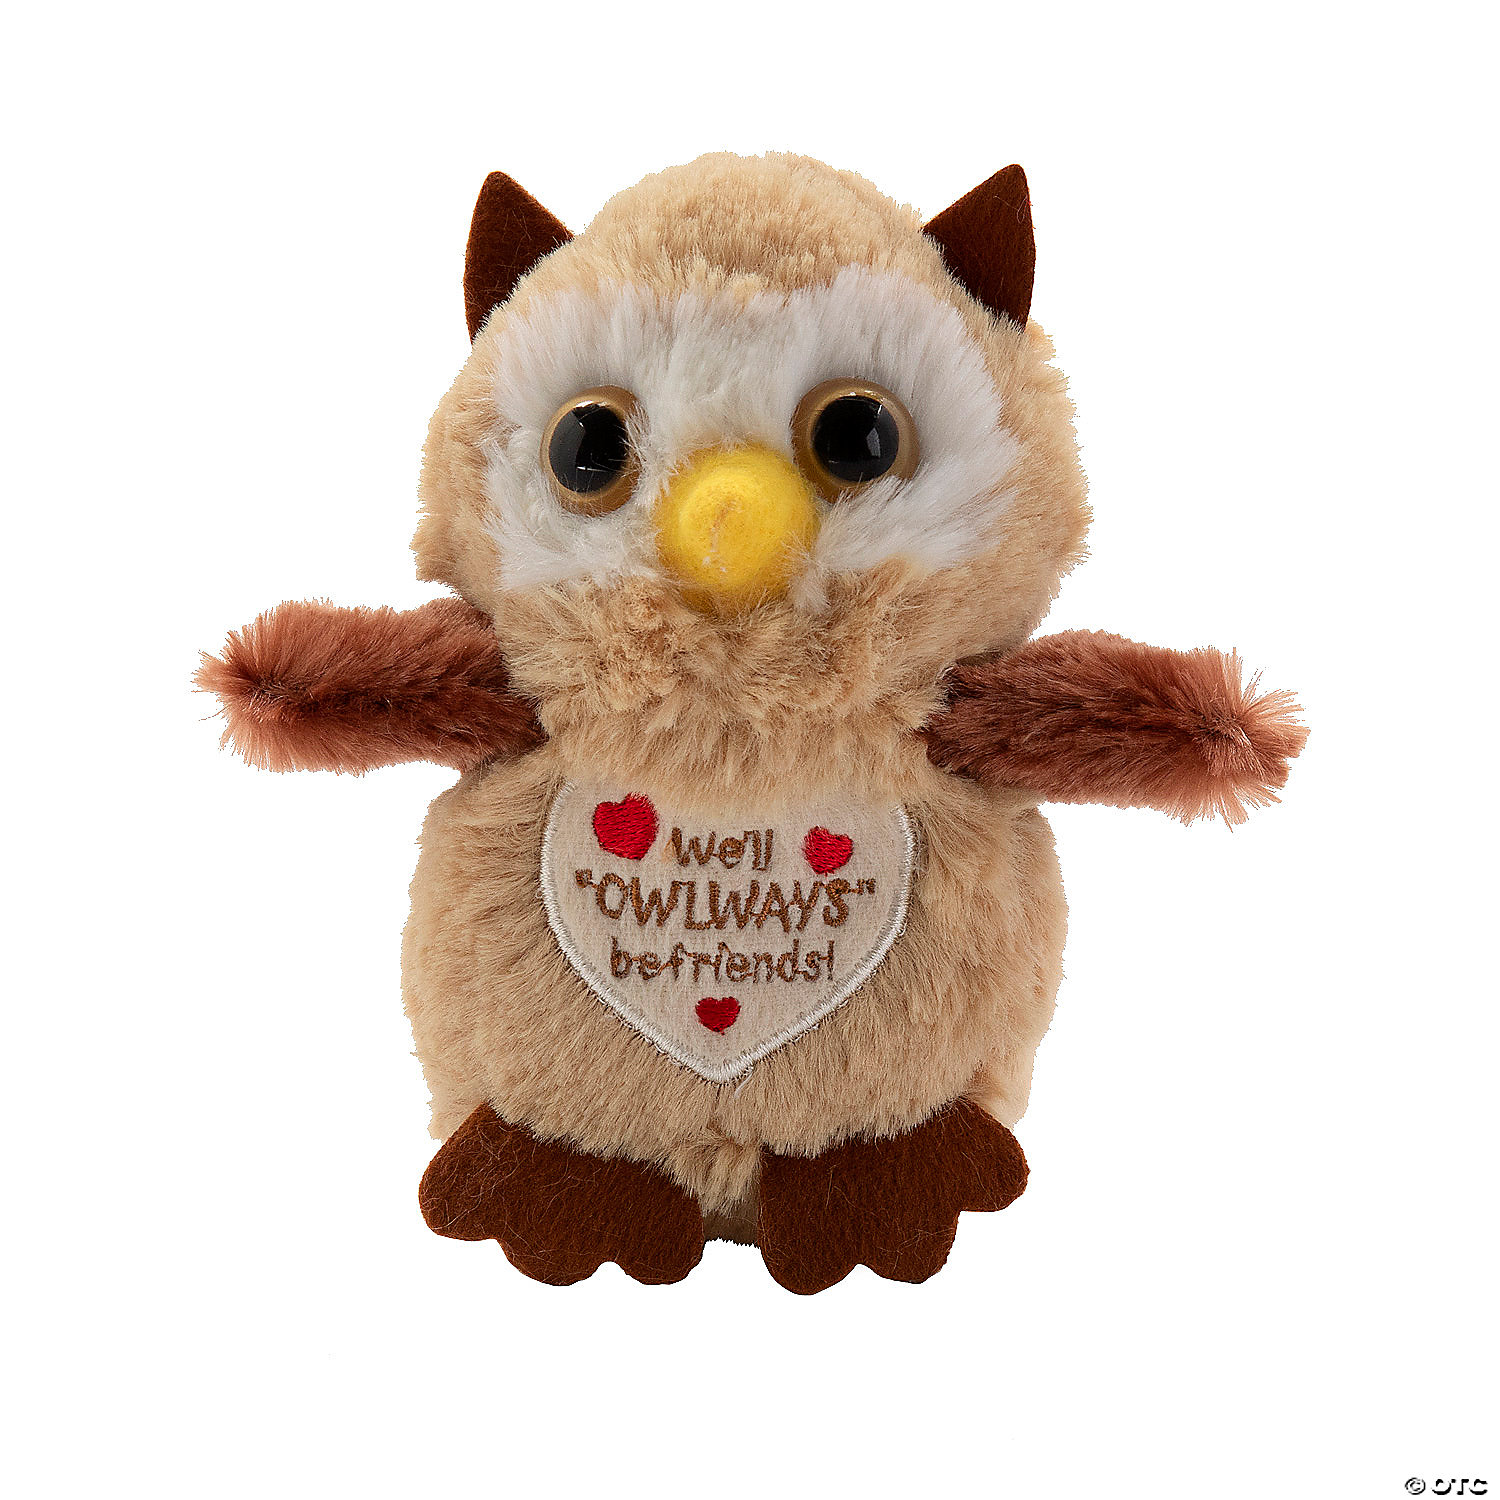 Valentine Gifts Classroom Valentines Owl Valentines Owl Valentine Gum Holder Valentine Teacher Gift Valentine Party Favor